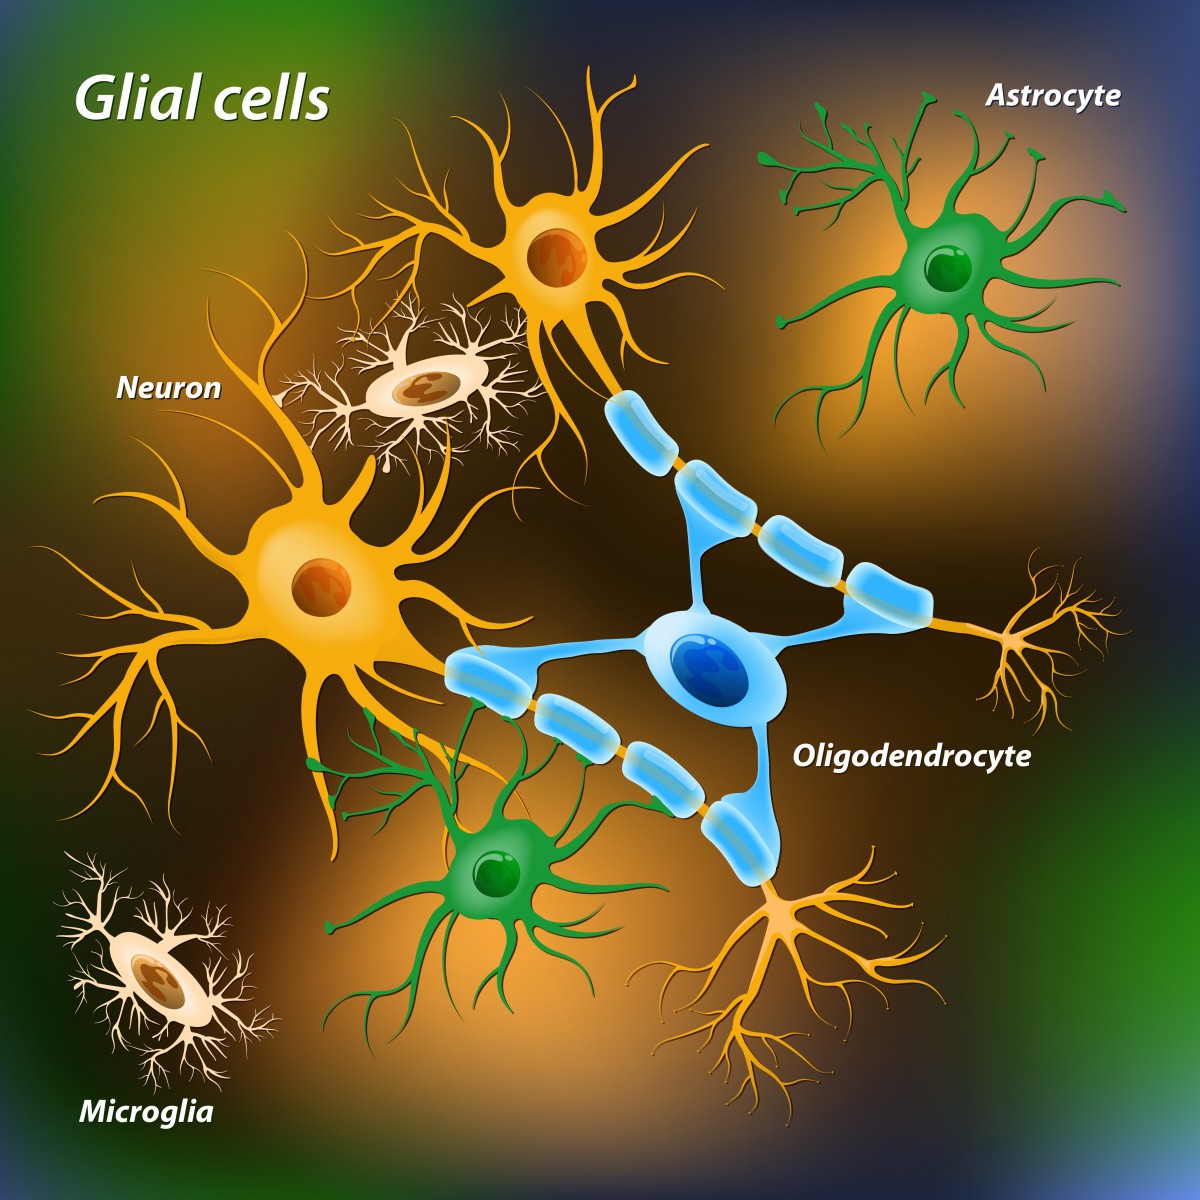 myelin-producing cells